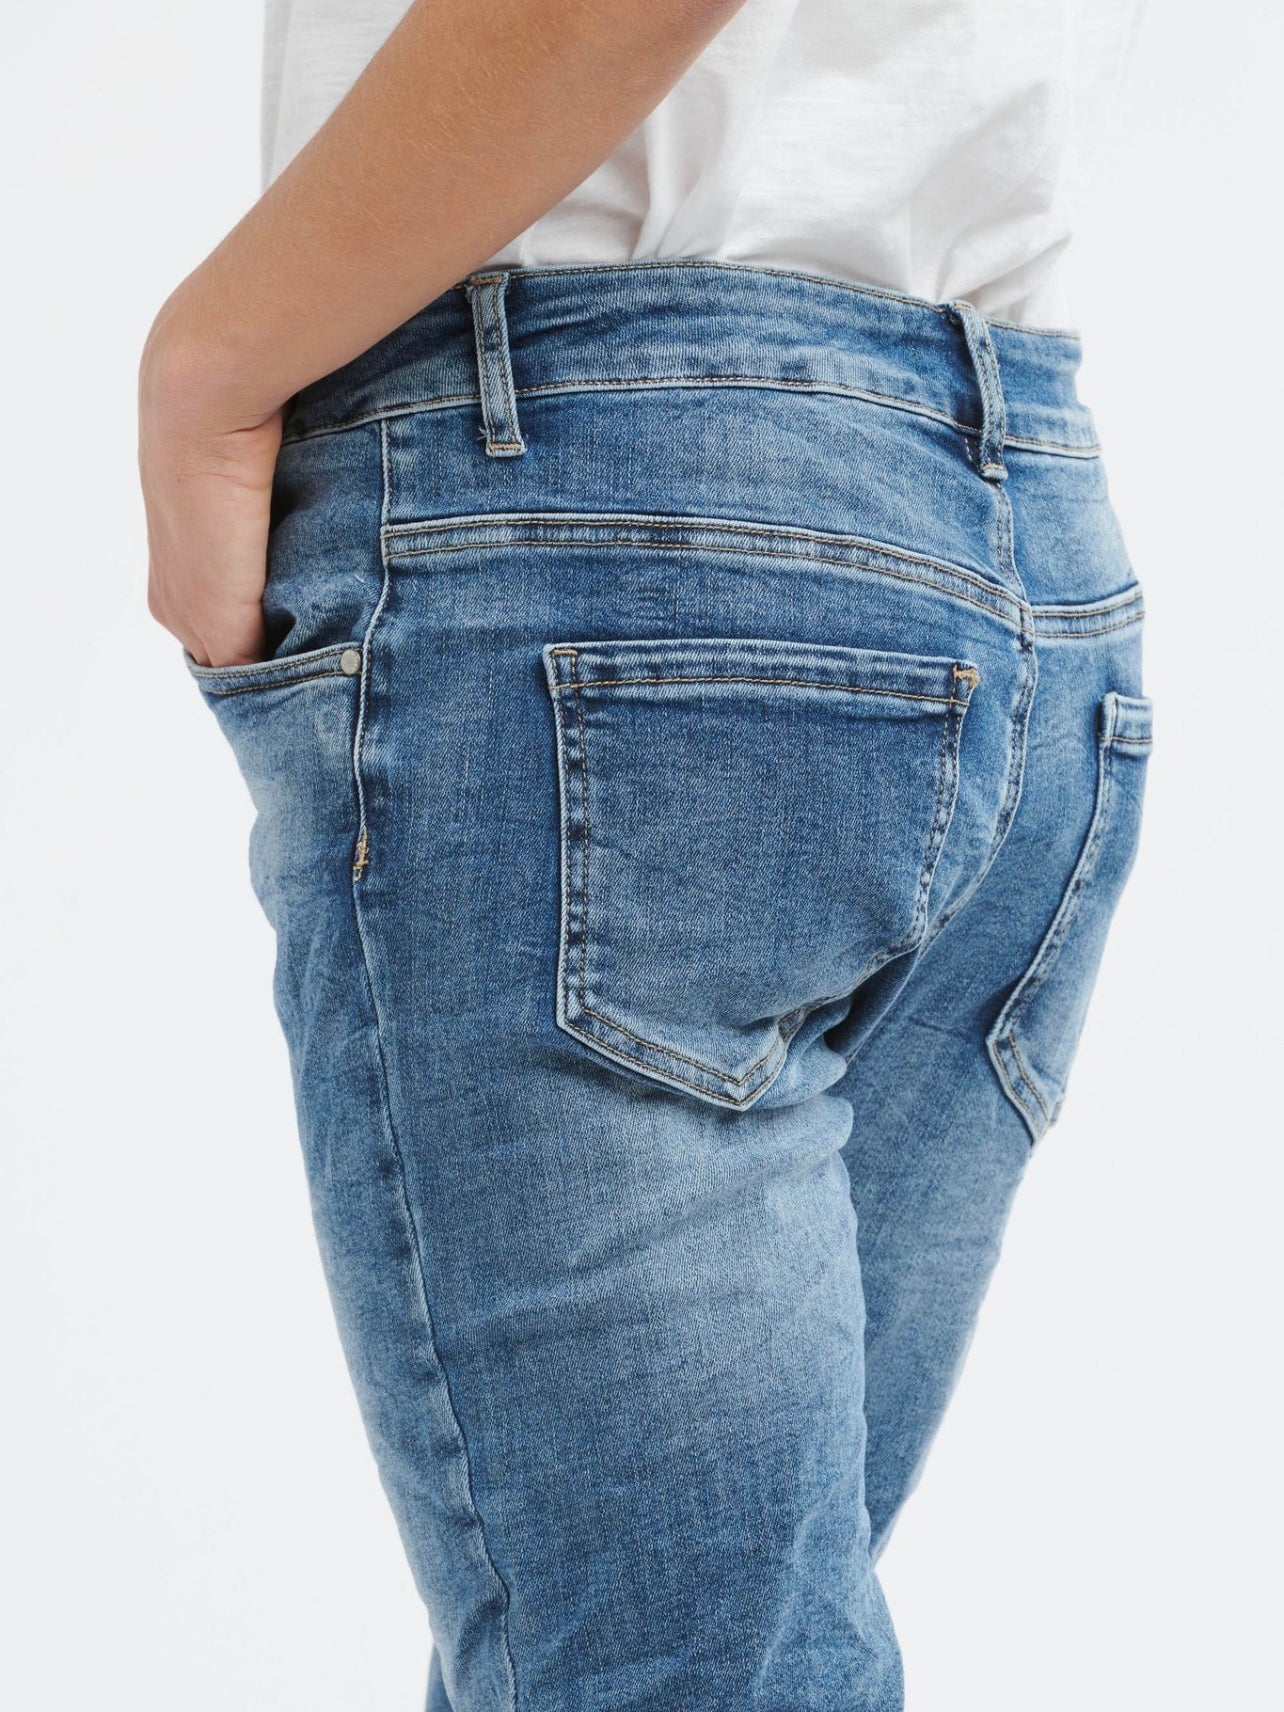 Italian Star : Denim Jeans : New Style